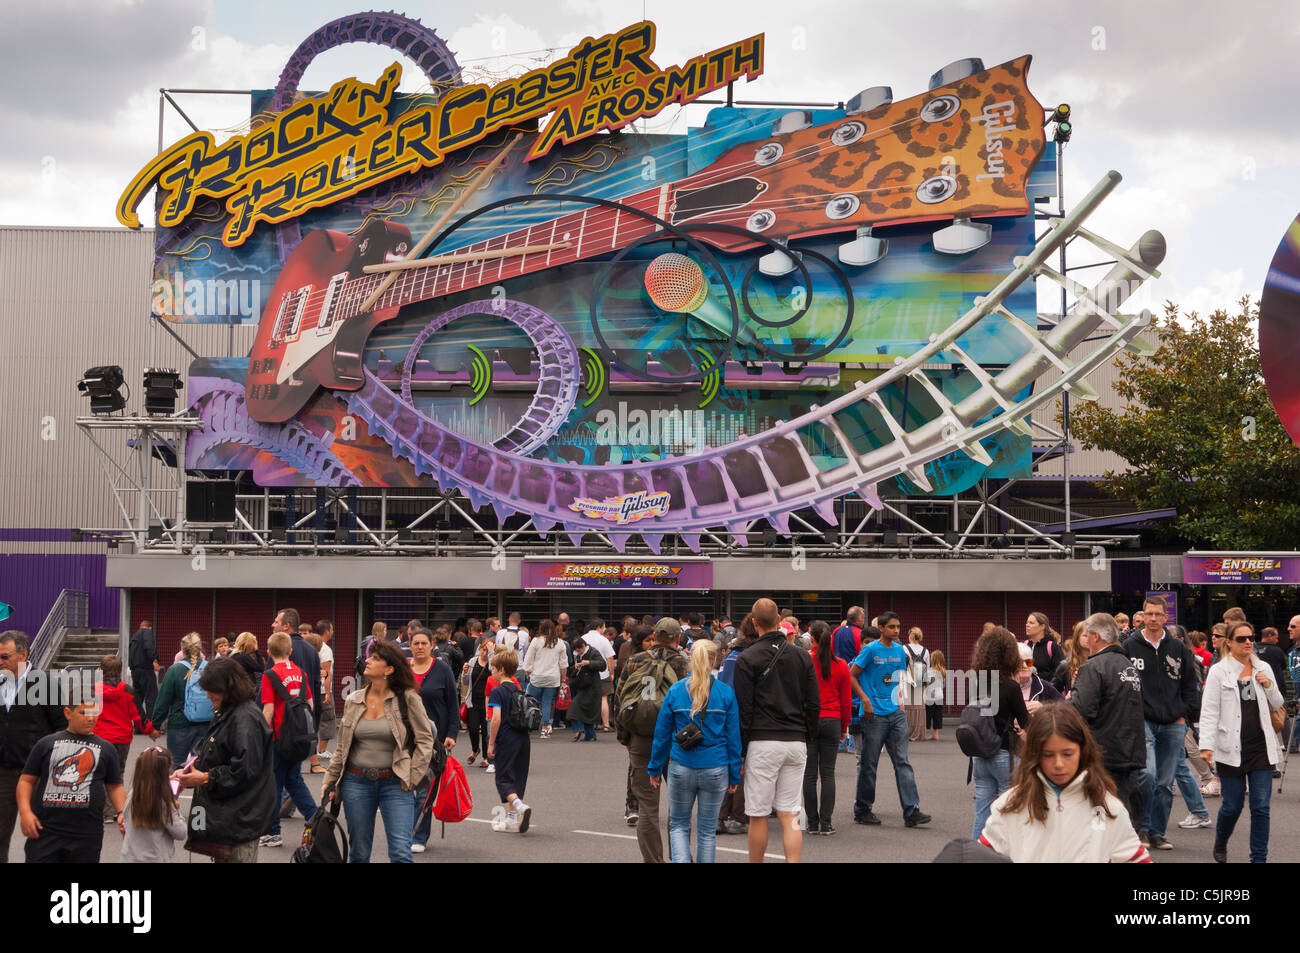 The Rock 'n' rollercoaster with Aerosmith roller coaster ride at the Walt  Disney Studios park at Disneyland Paris in Franc Stock Photo - Alamy